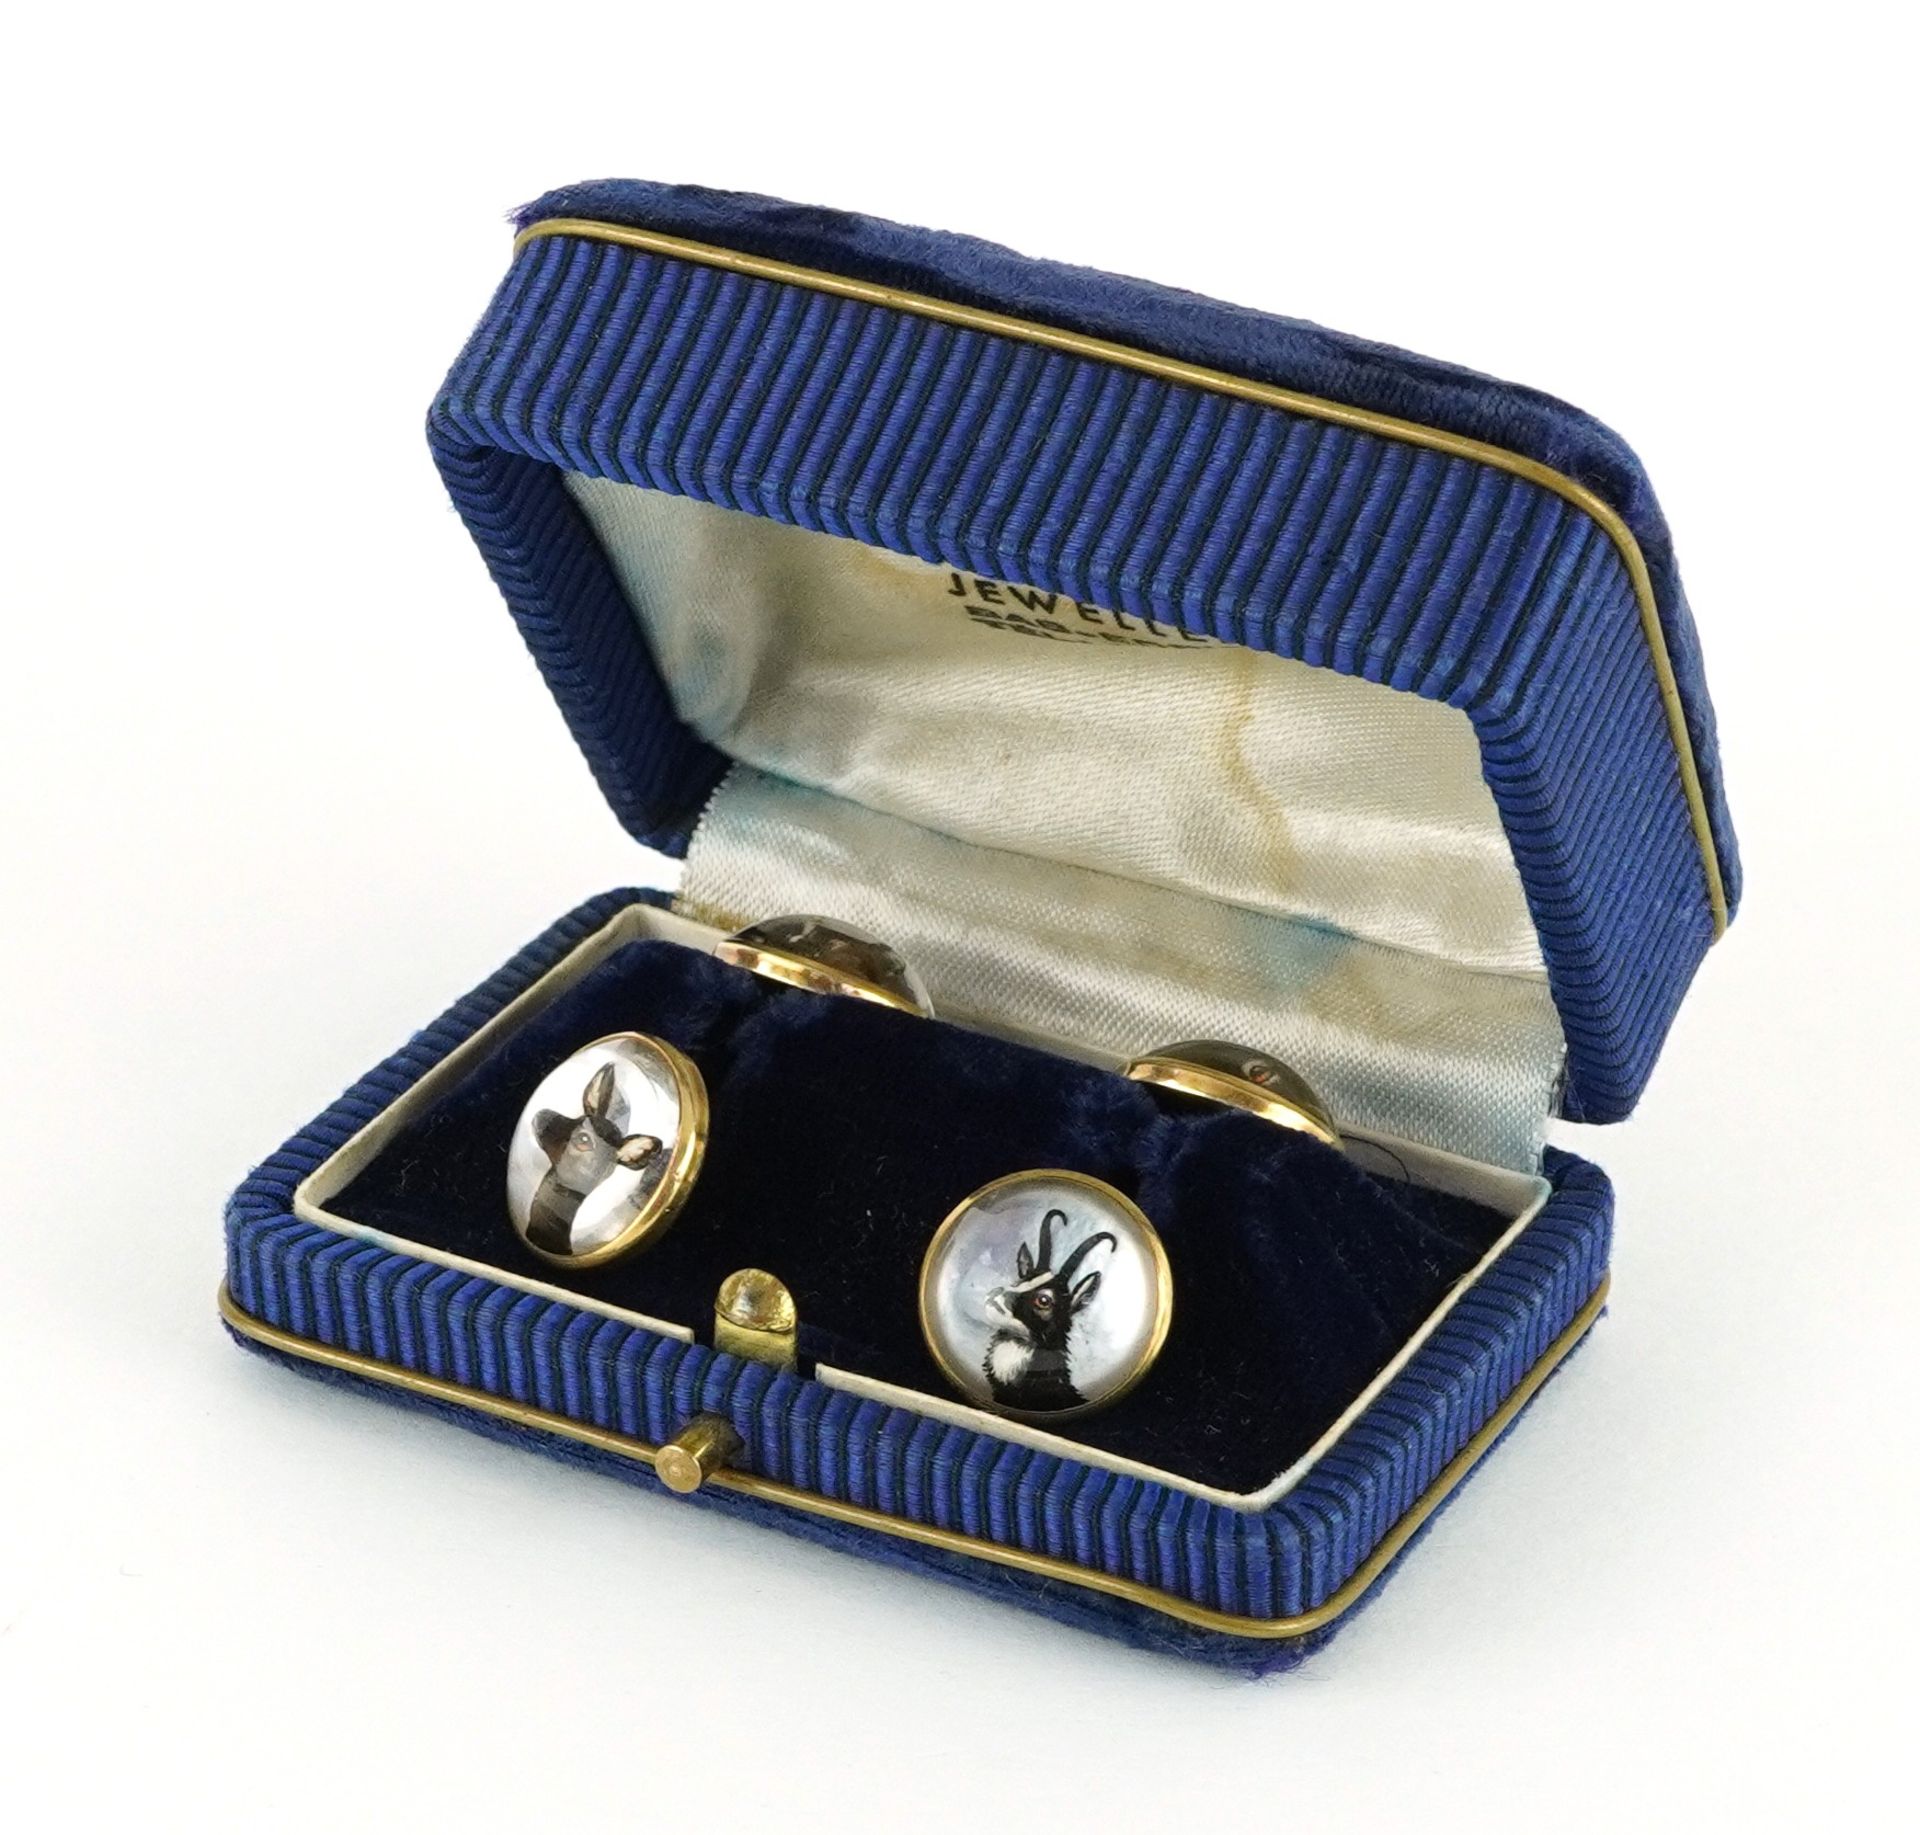 Pair of 14ct gold Essex Crystal deer cufflinks housed in a fitted velvet box, 1.4cm in diameter, - Image 3 of 4